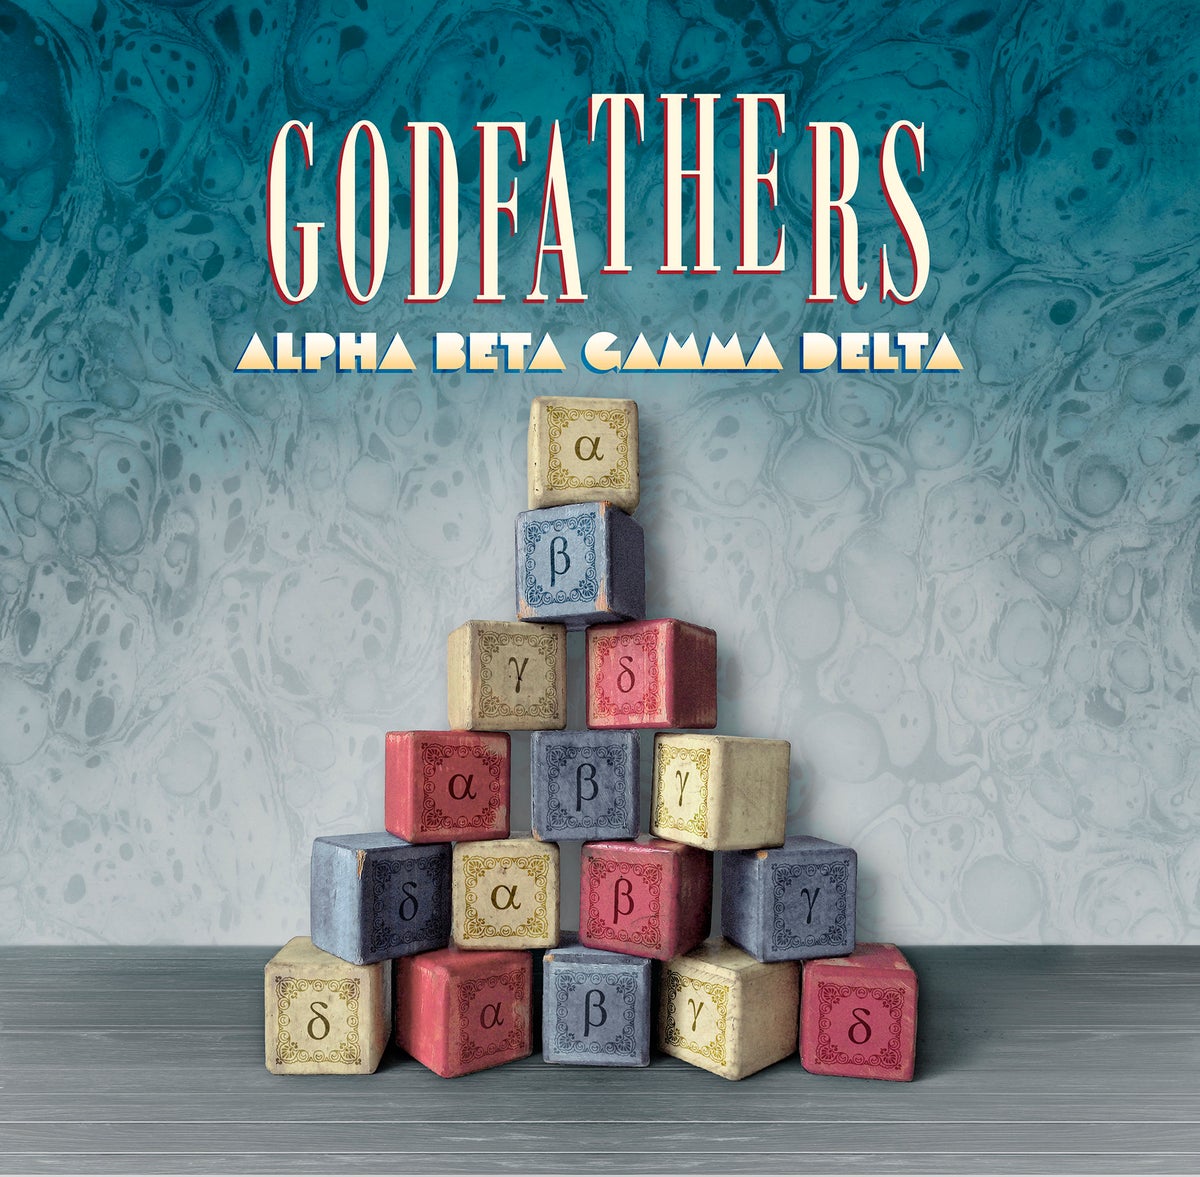 News – The Godfathers – Alpha Beta Gamma Delta